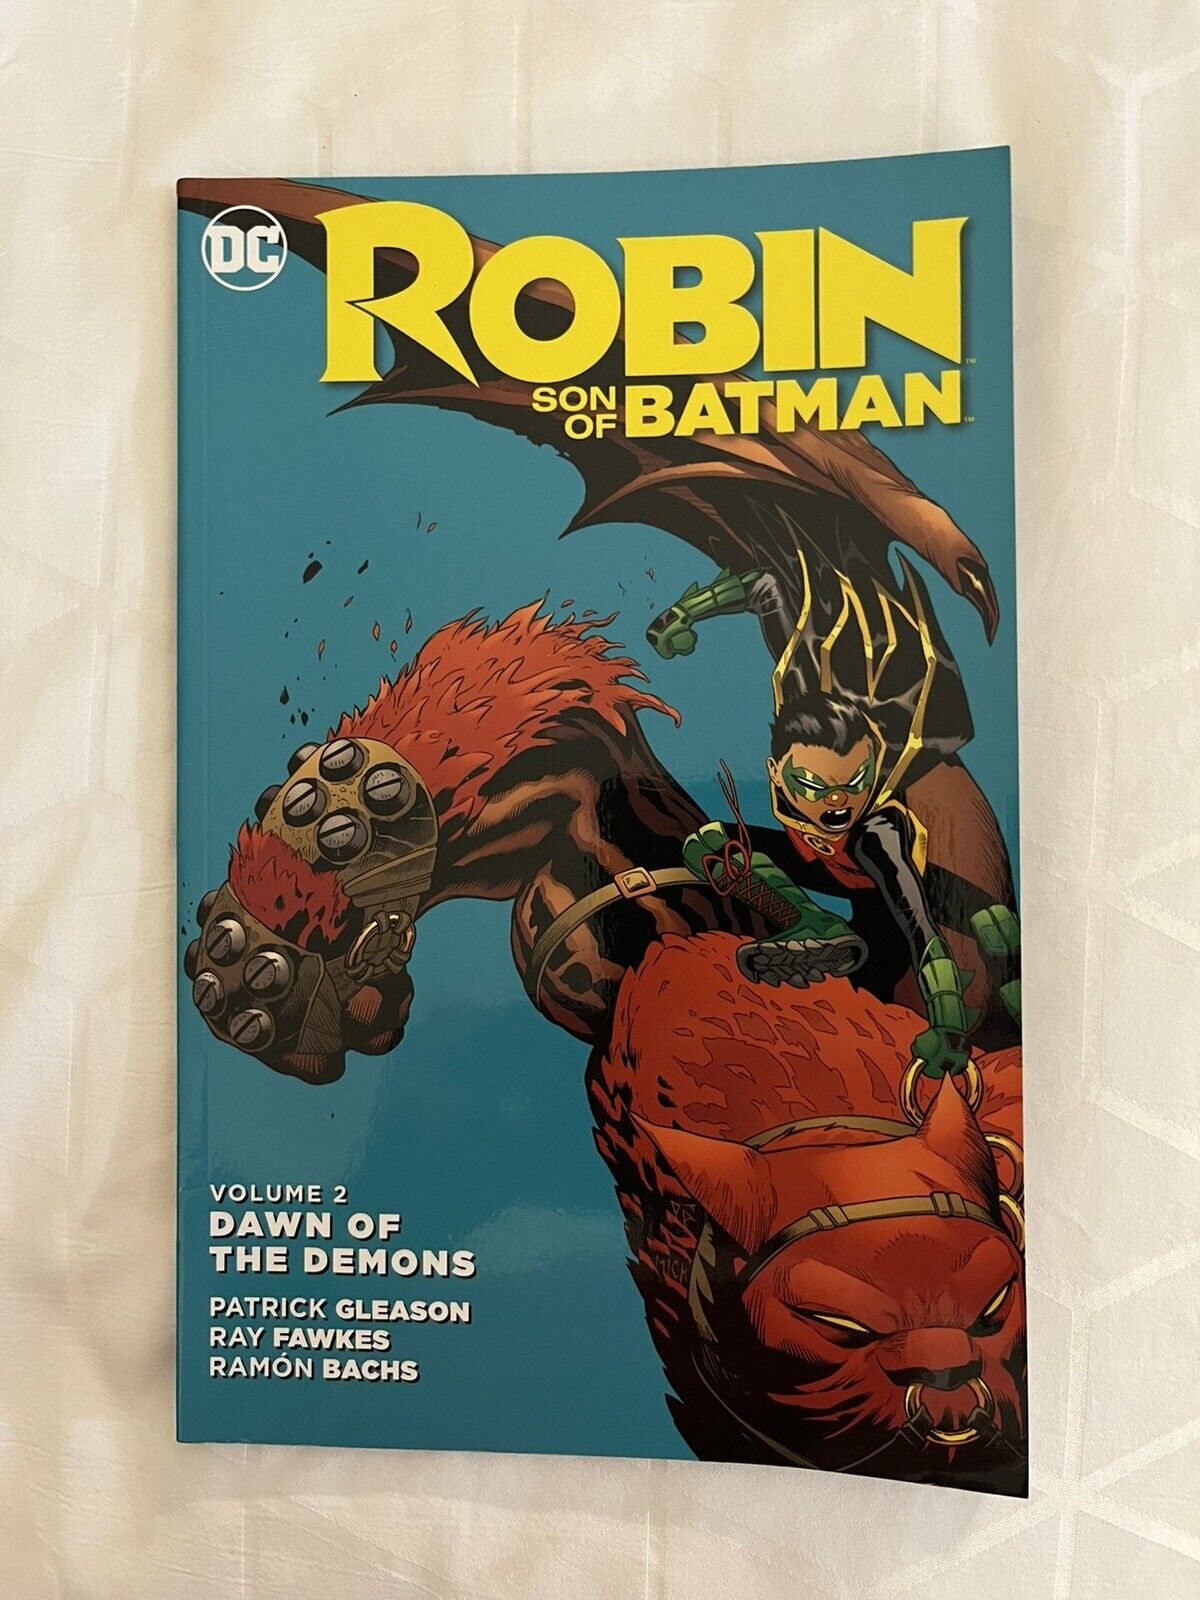 ROBIN SON OF BATMAN Vol. 2 Dawn of the Demons DC TPB 2016 1st Print NM- Unread